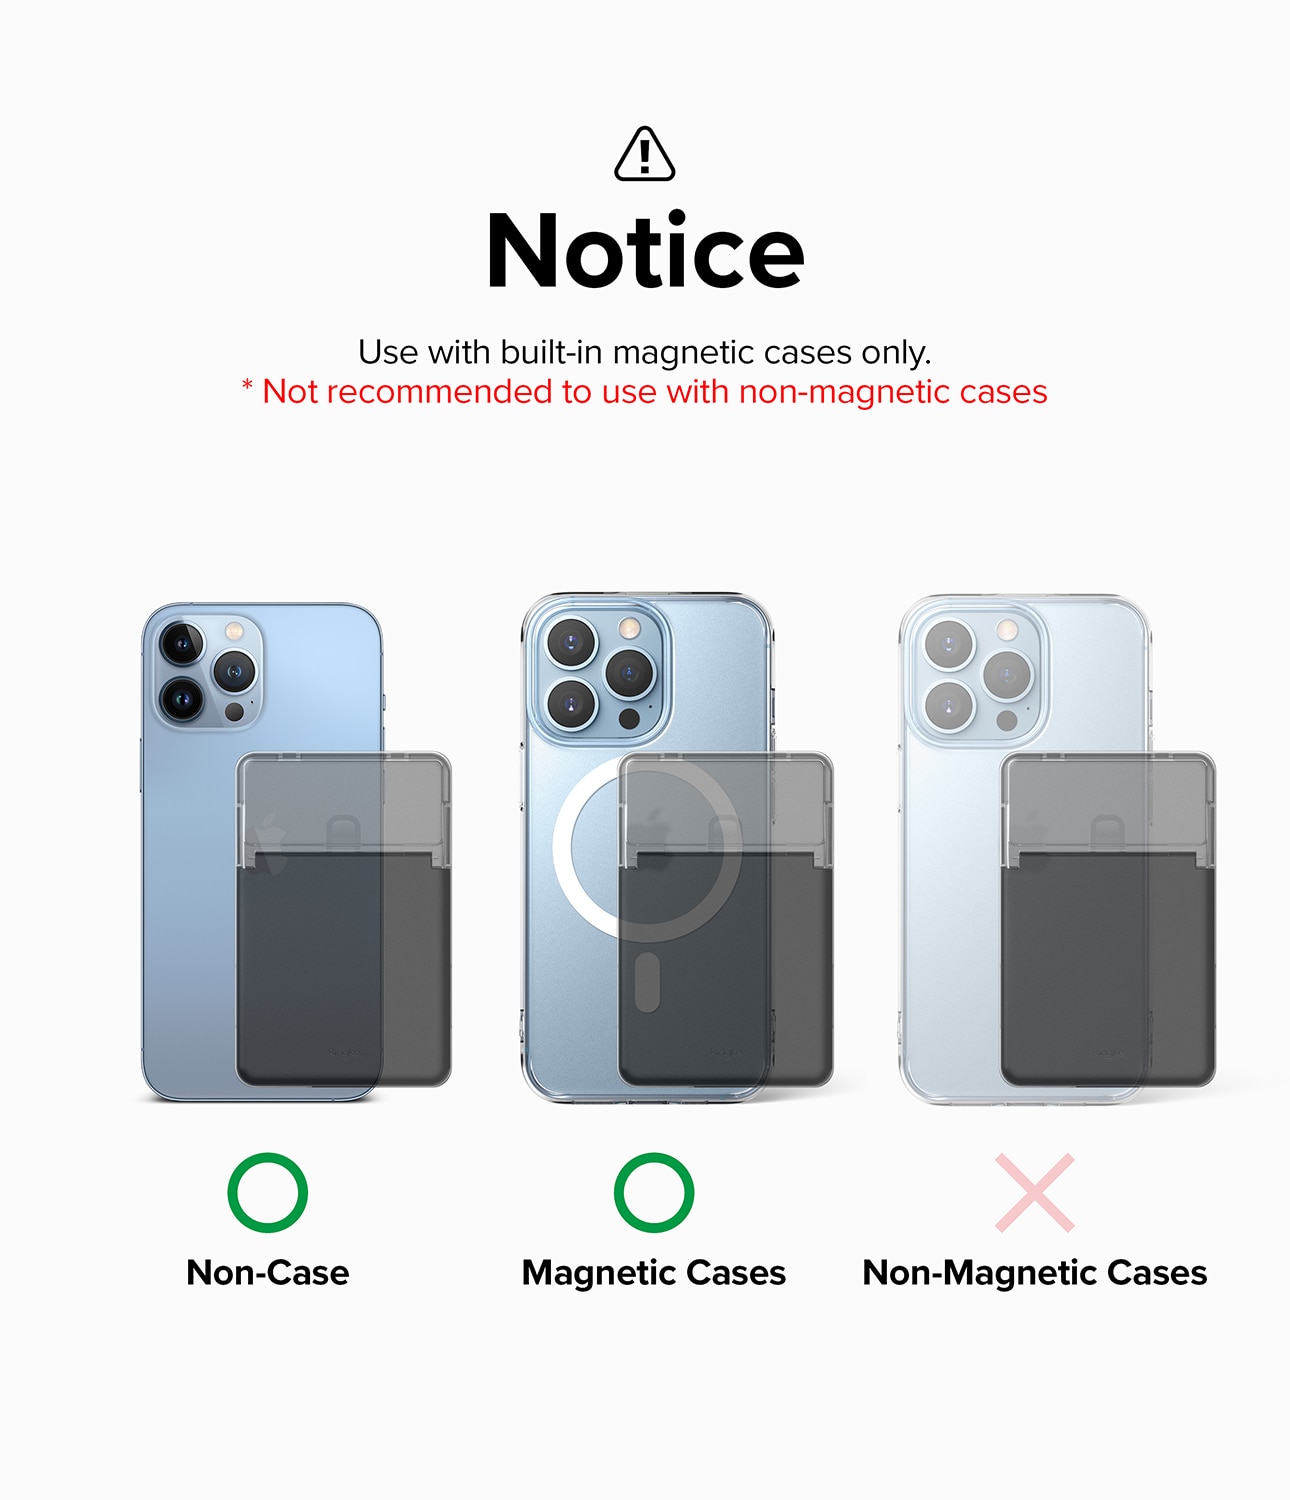 Magnetic Stand Slot Card Holder MagSafe Clear/Black